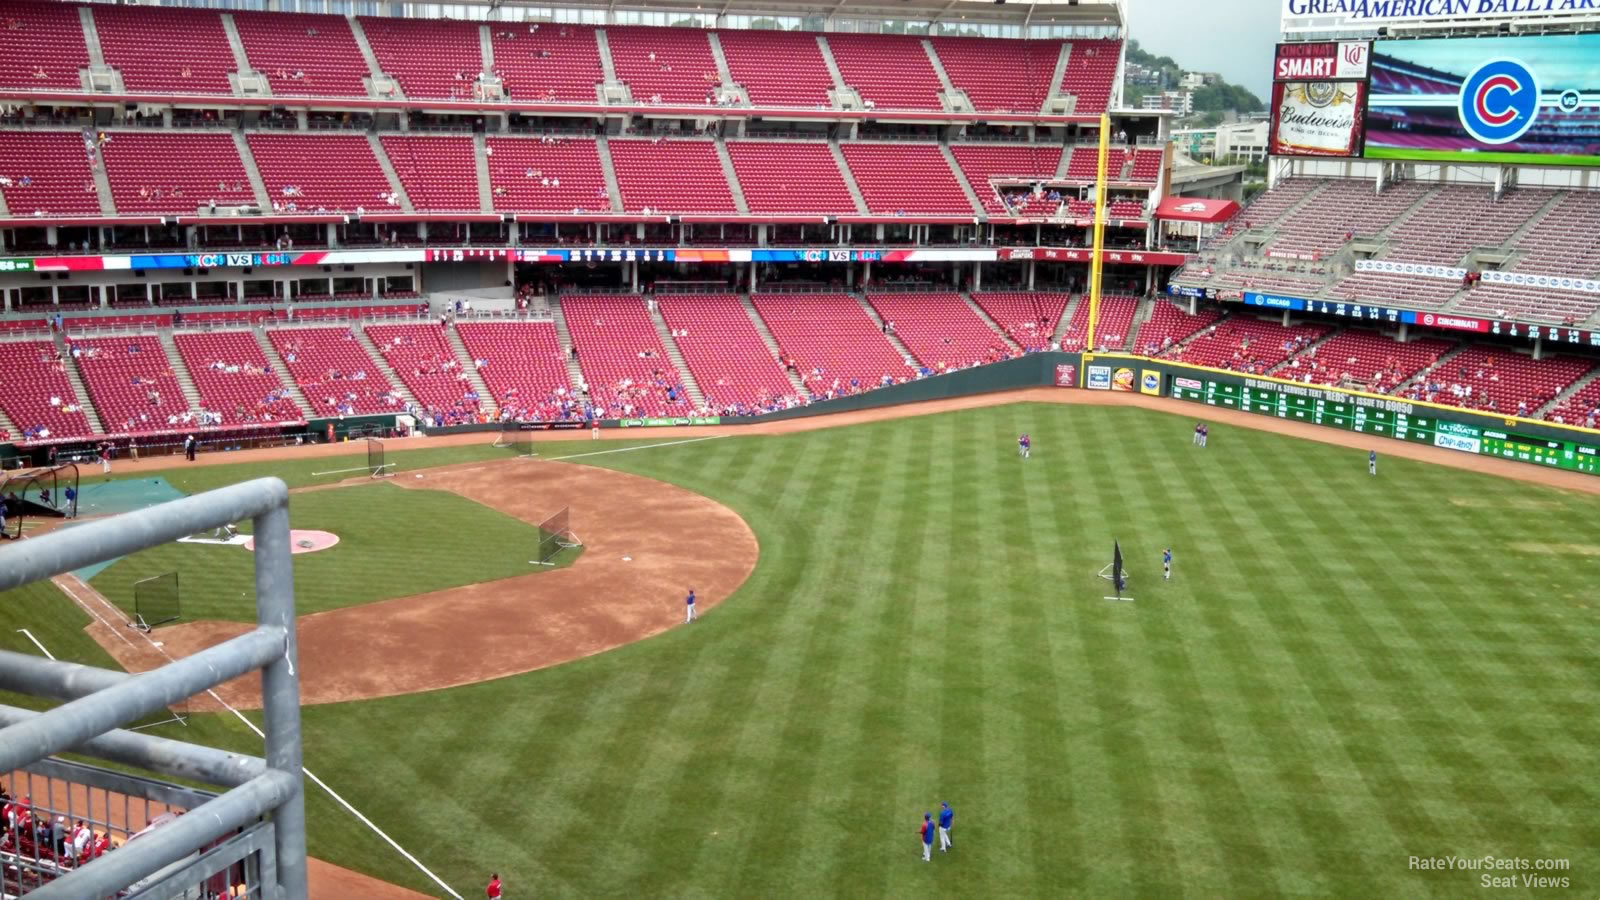 redlegs landing seat view  for baseball - great american ball park